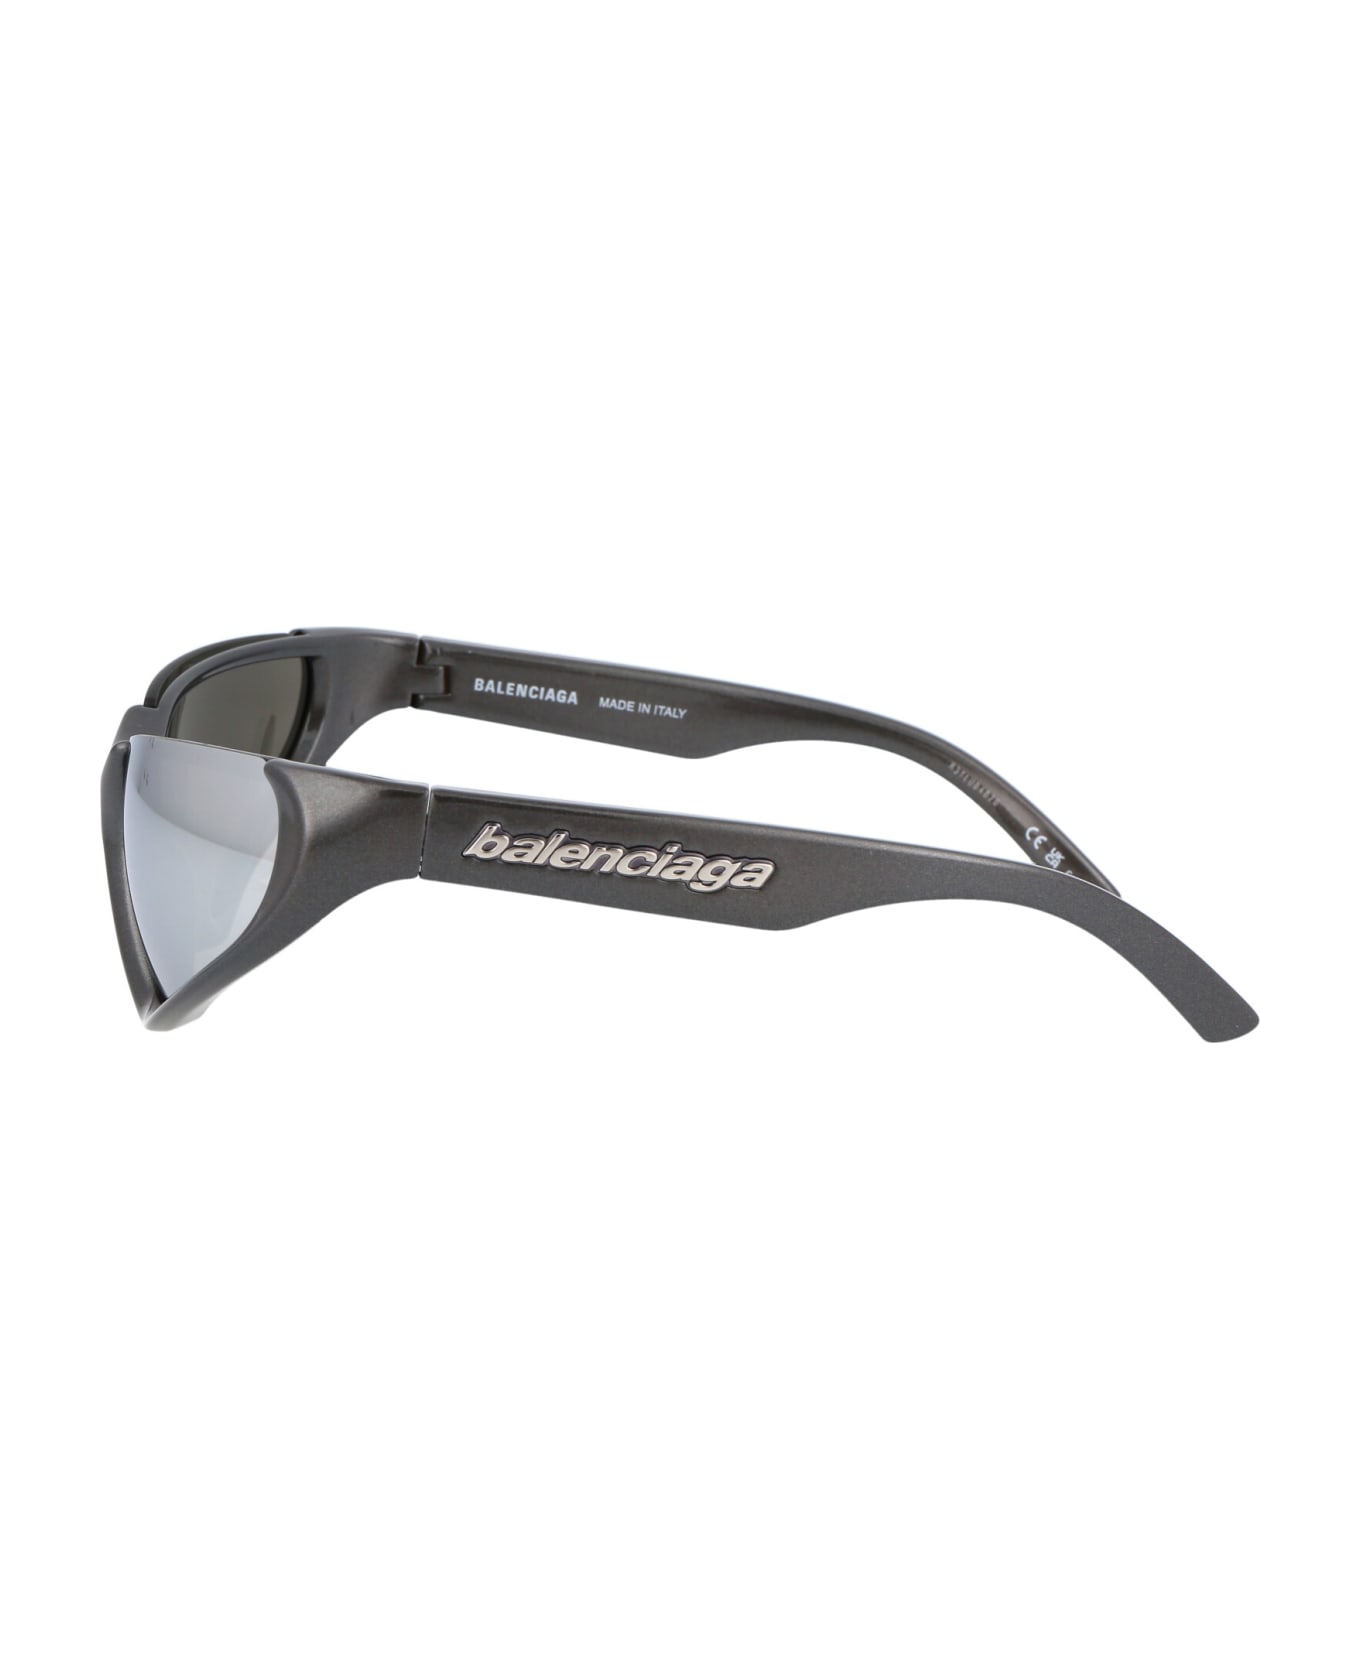 Balenciaga Eyewear Bb0202s Sunglasses - 002 SILVER SILVER SILVER サングラス